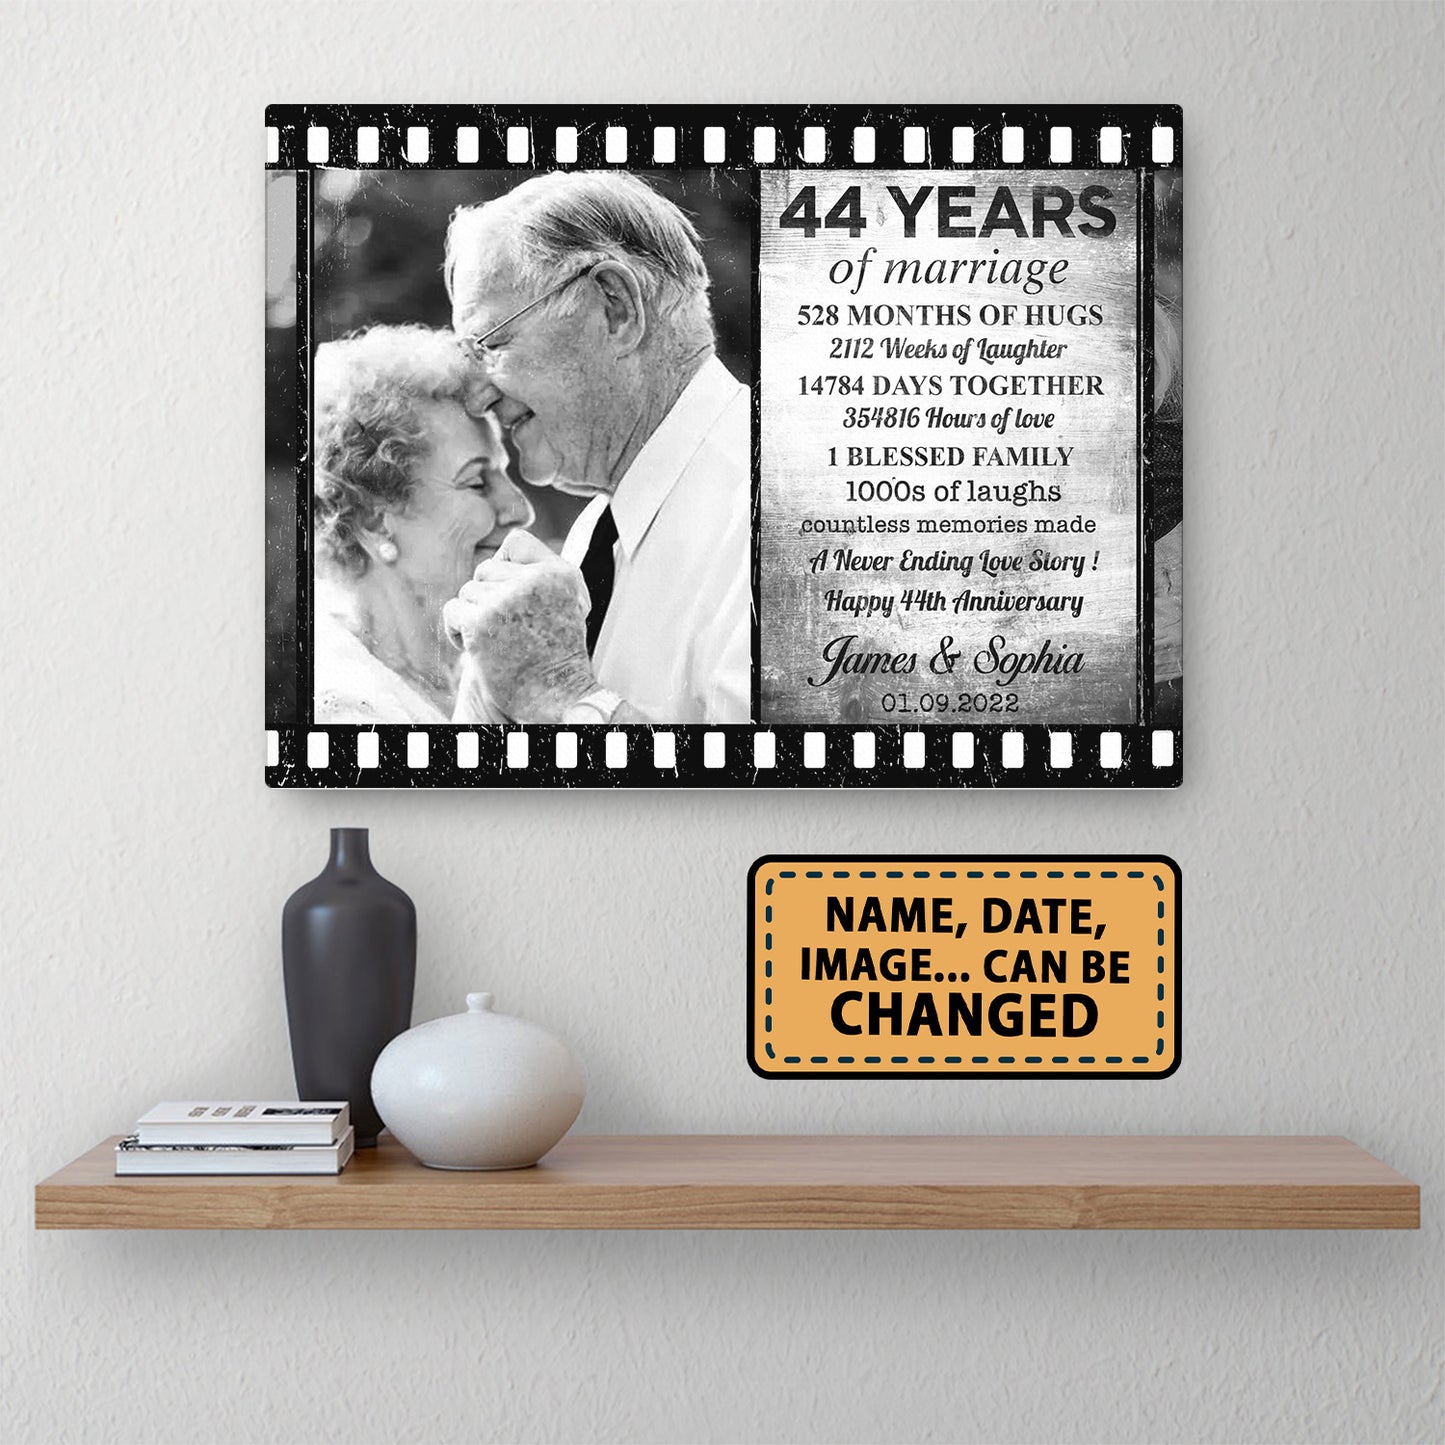 44 Years Of Marriage Film Custom Image Anniversary Canvas